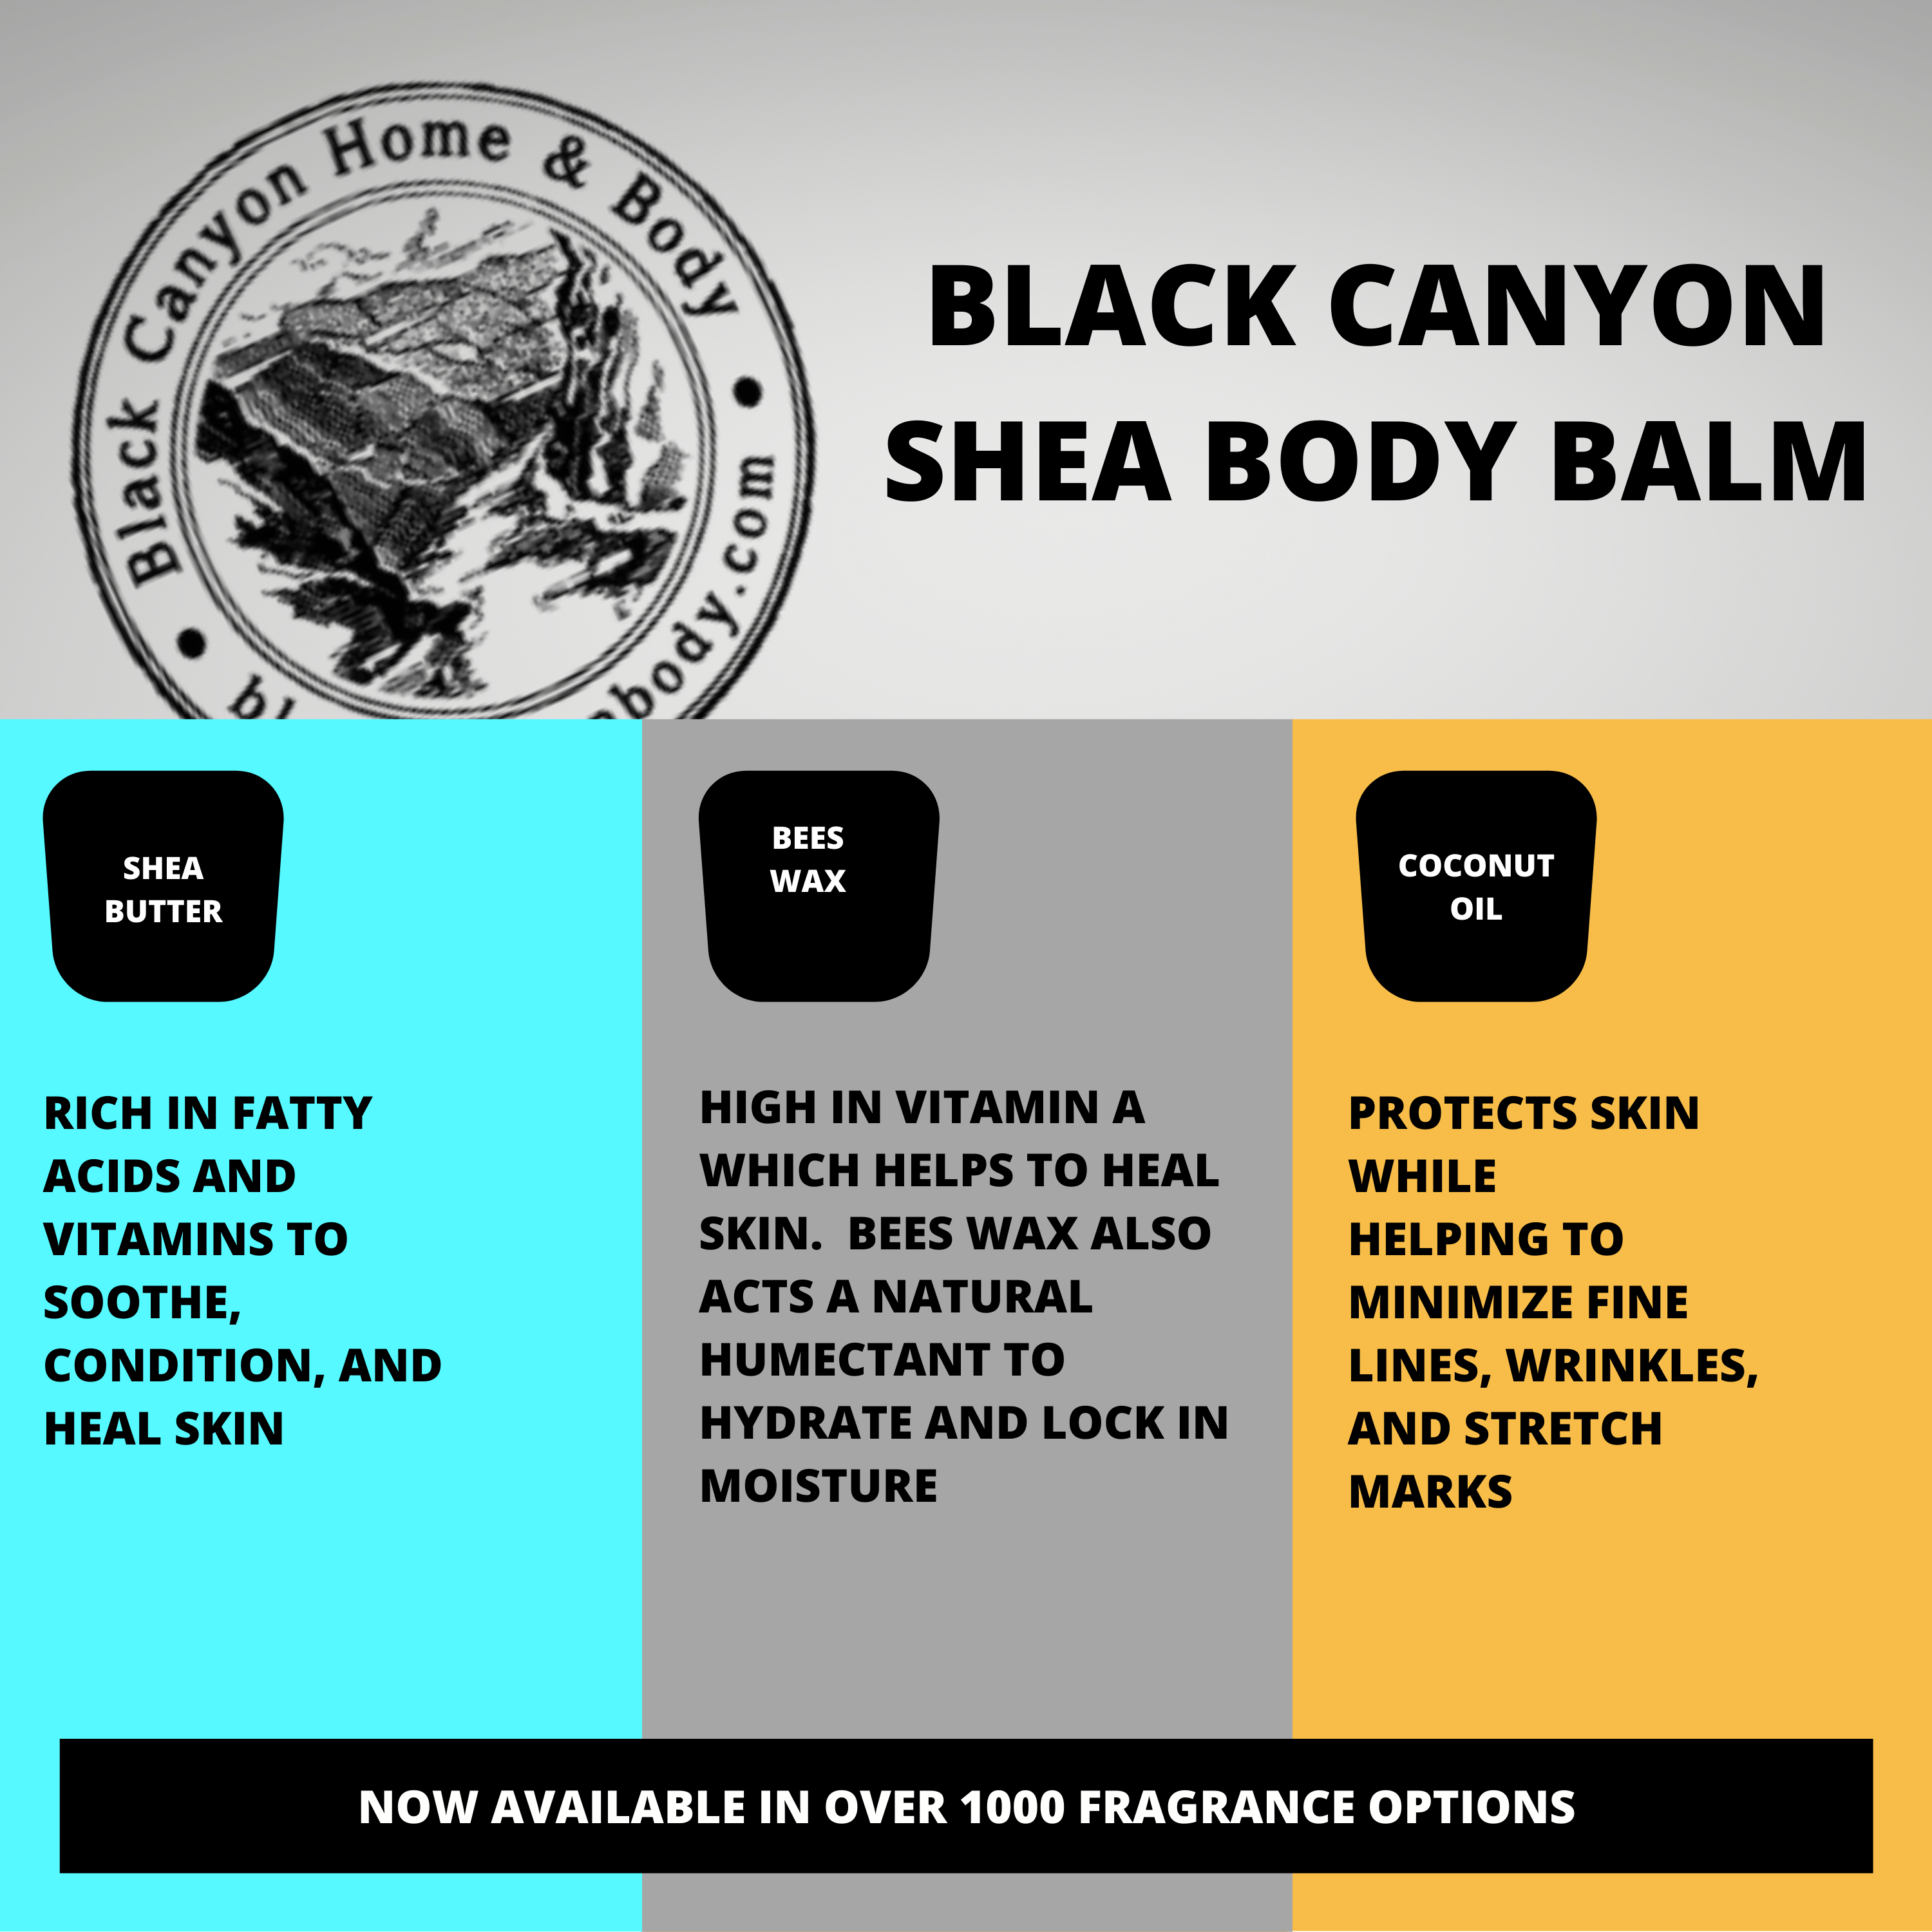 Black Canyon Frangipani Scented Natural Body Balm with Shea